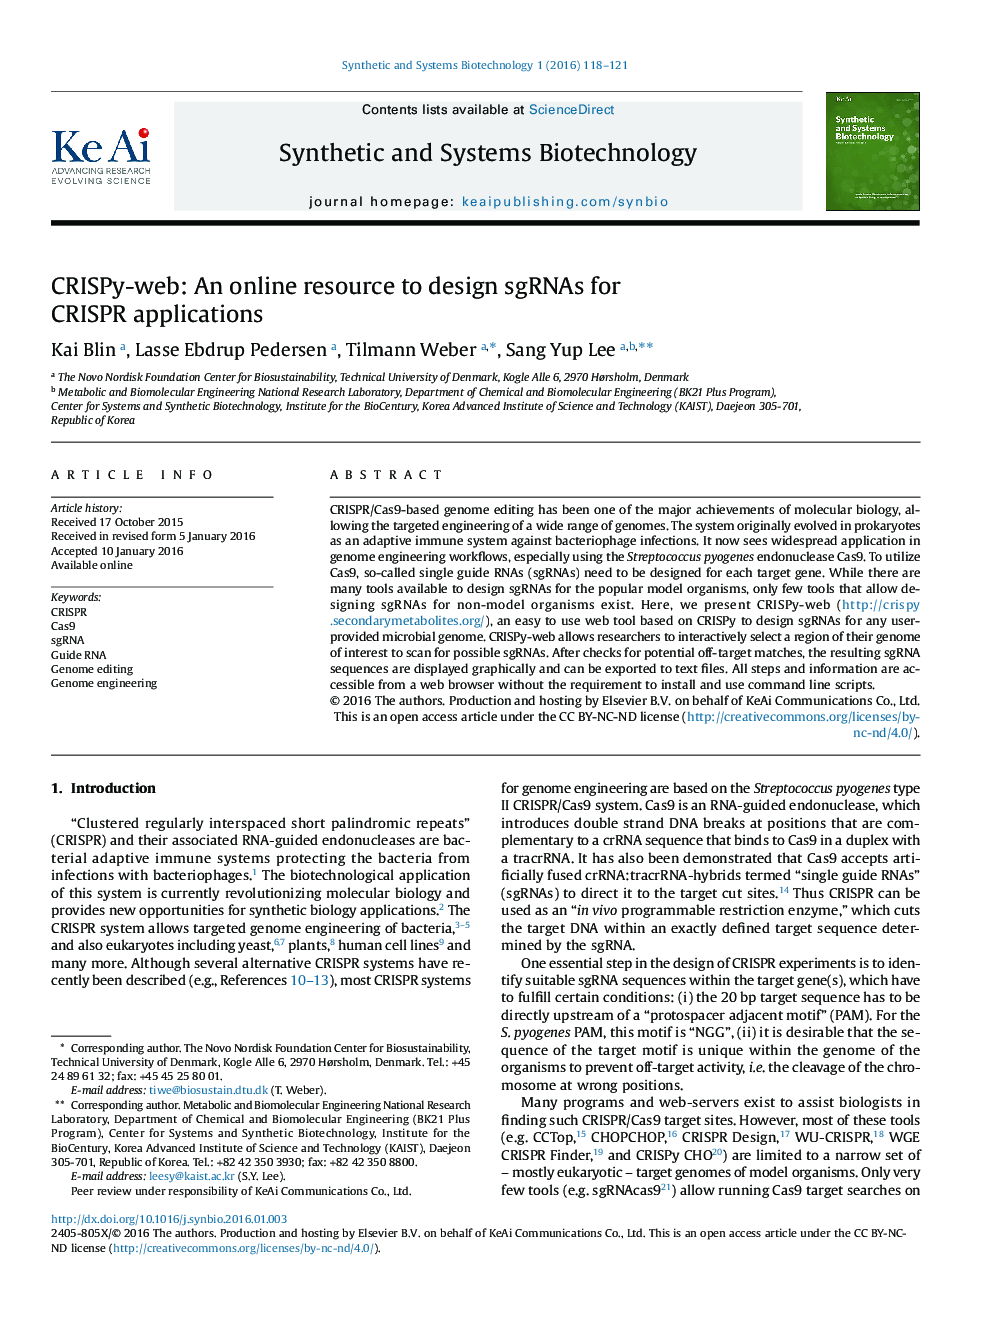 CRISPy-web: An online resource to design sgRNAs for CRISPR applications 